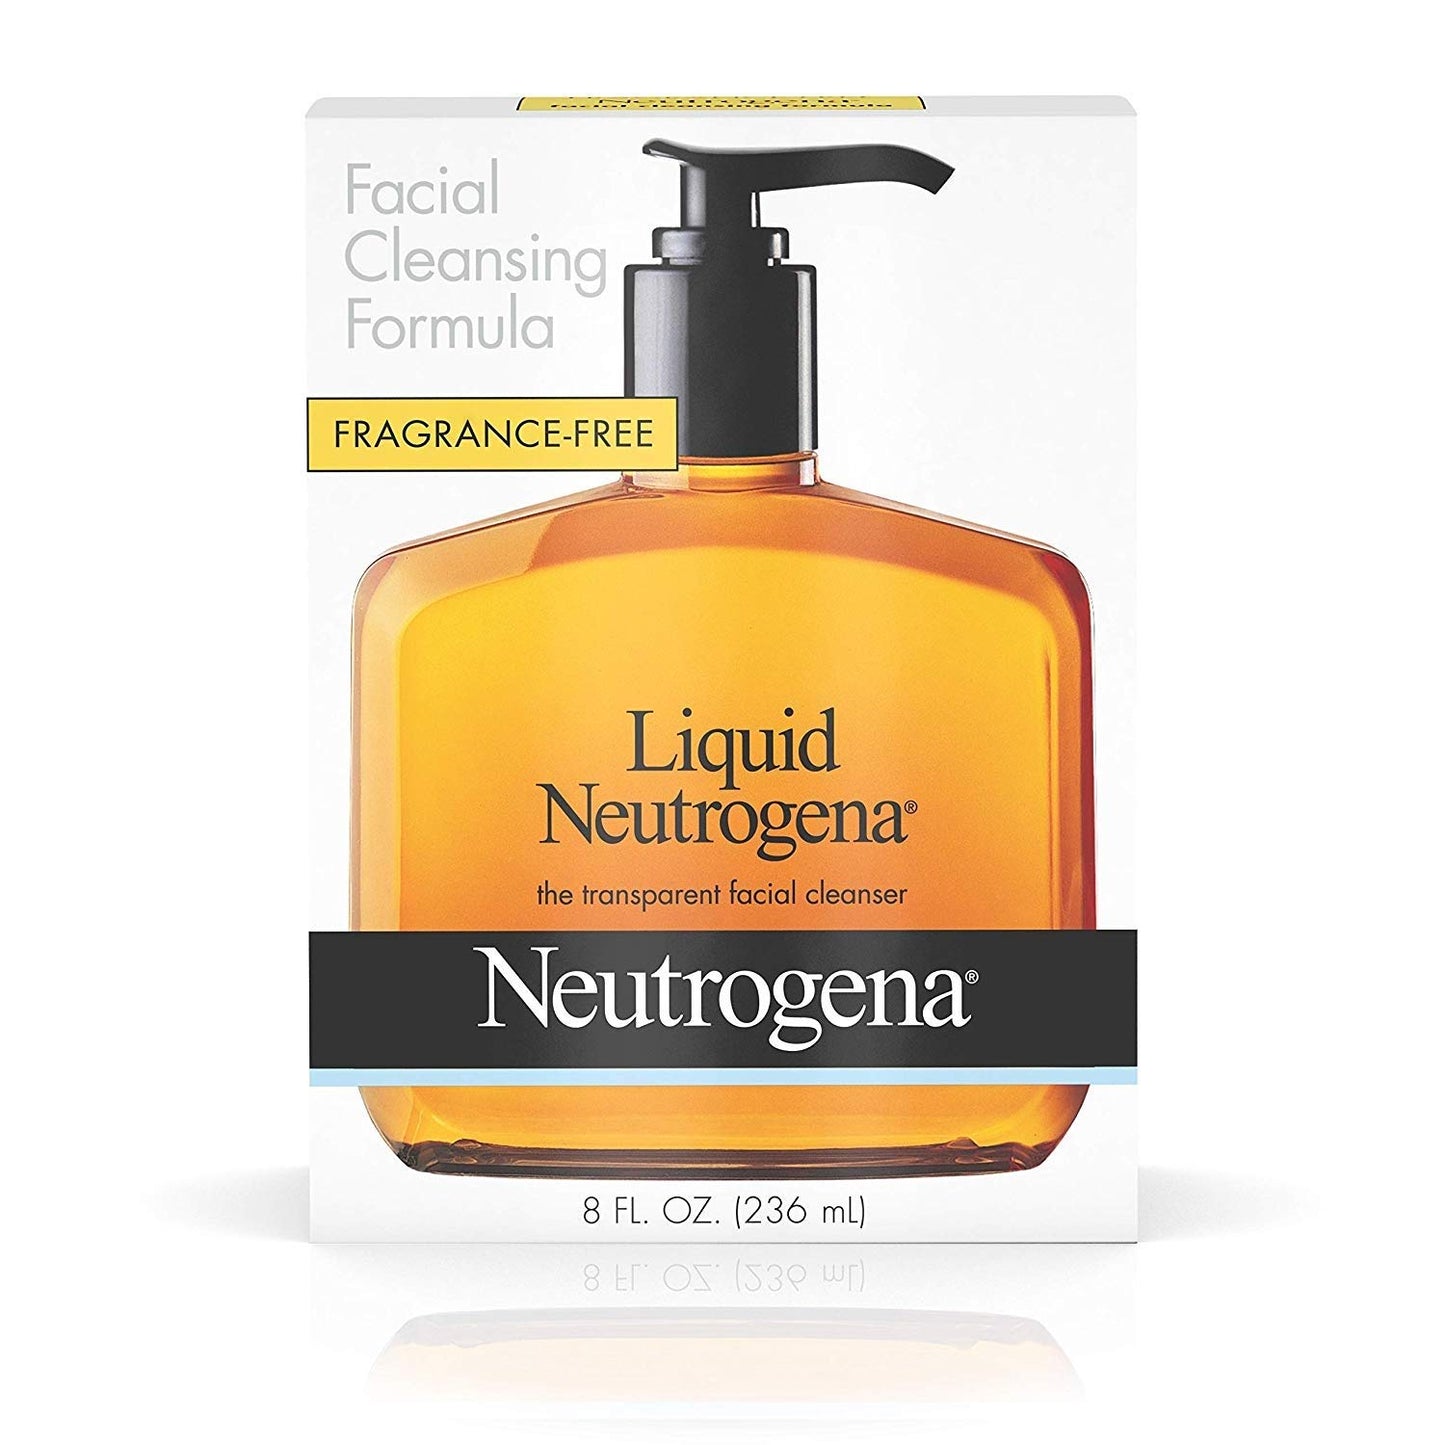 Neutrogena Fragrance Free Liquid Facial Cleansing Formula - Highfy.pk